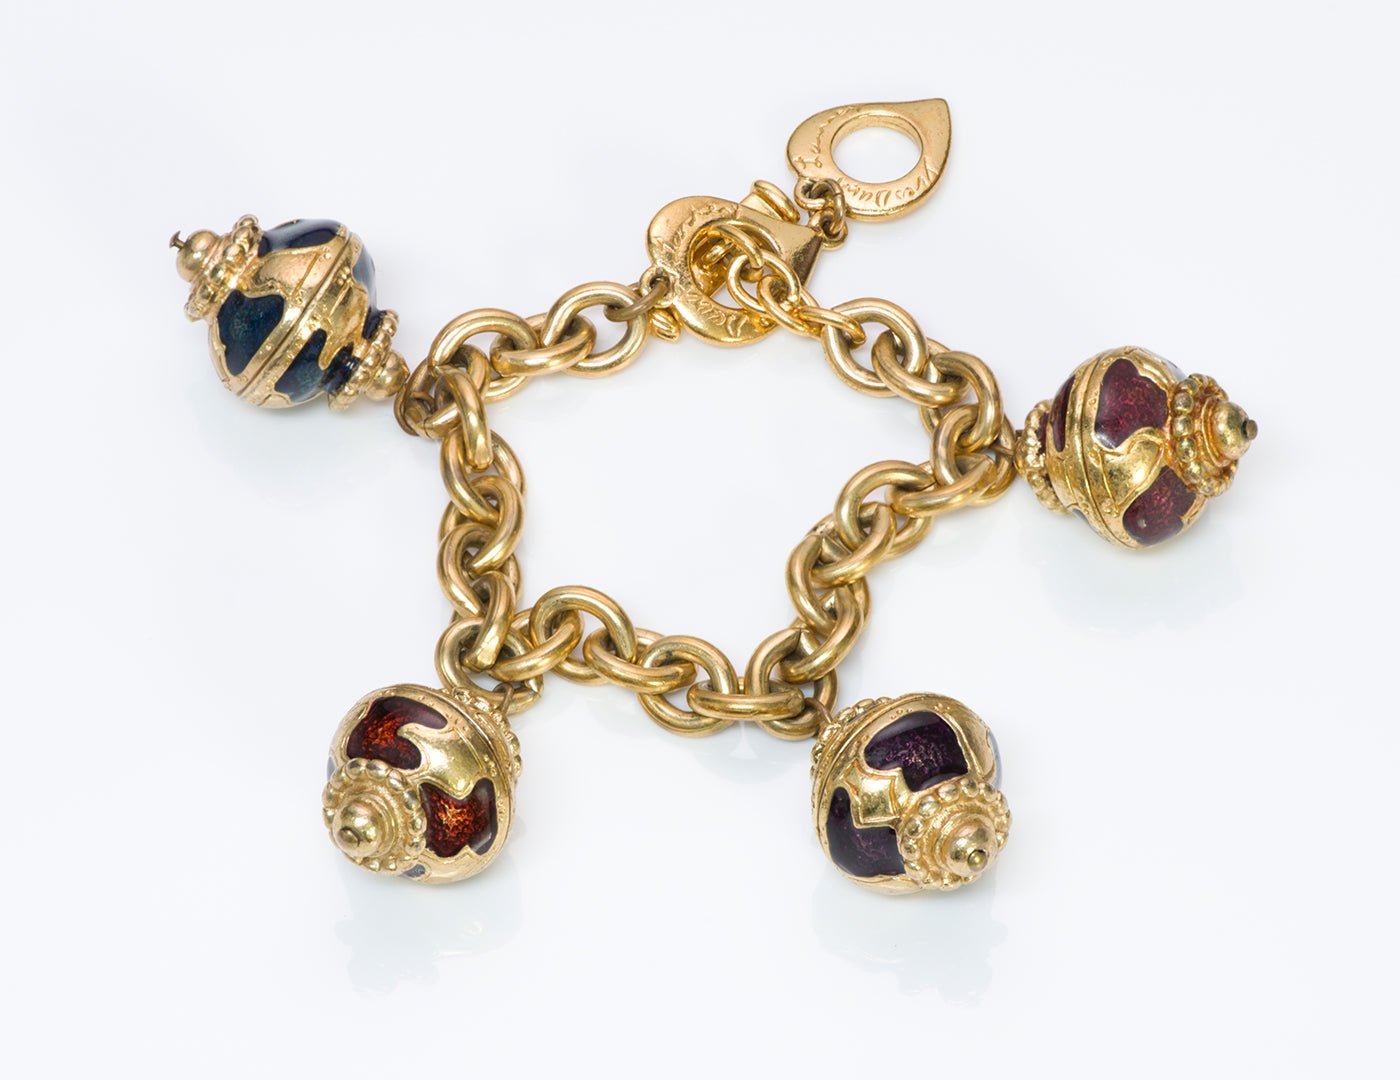 Vintage Yves St Laurent (YSL) Gold Tone Charm Bracelet | eBay